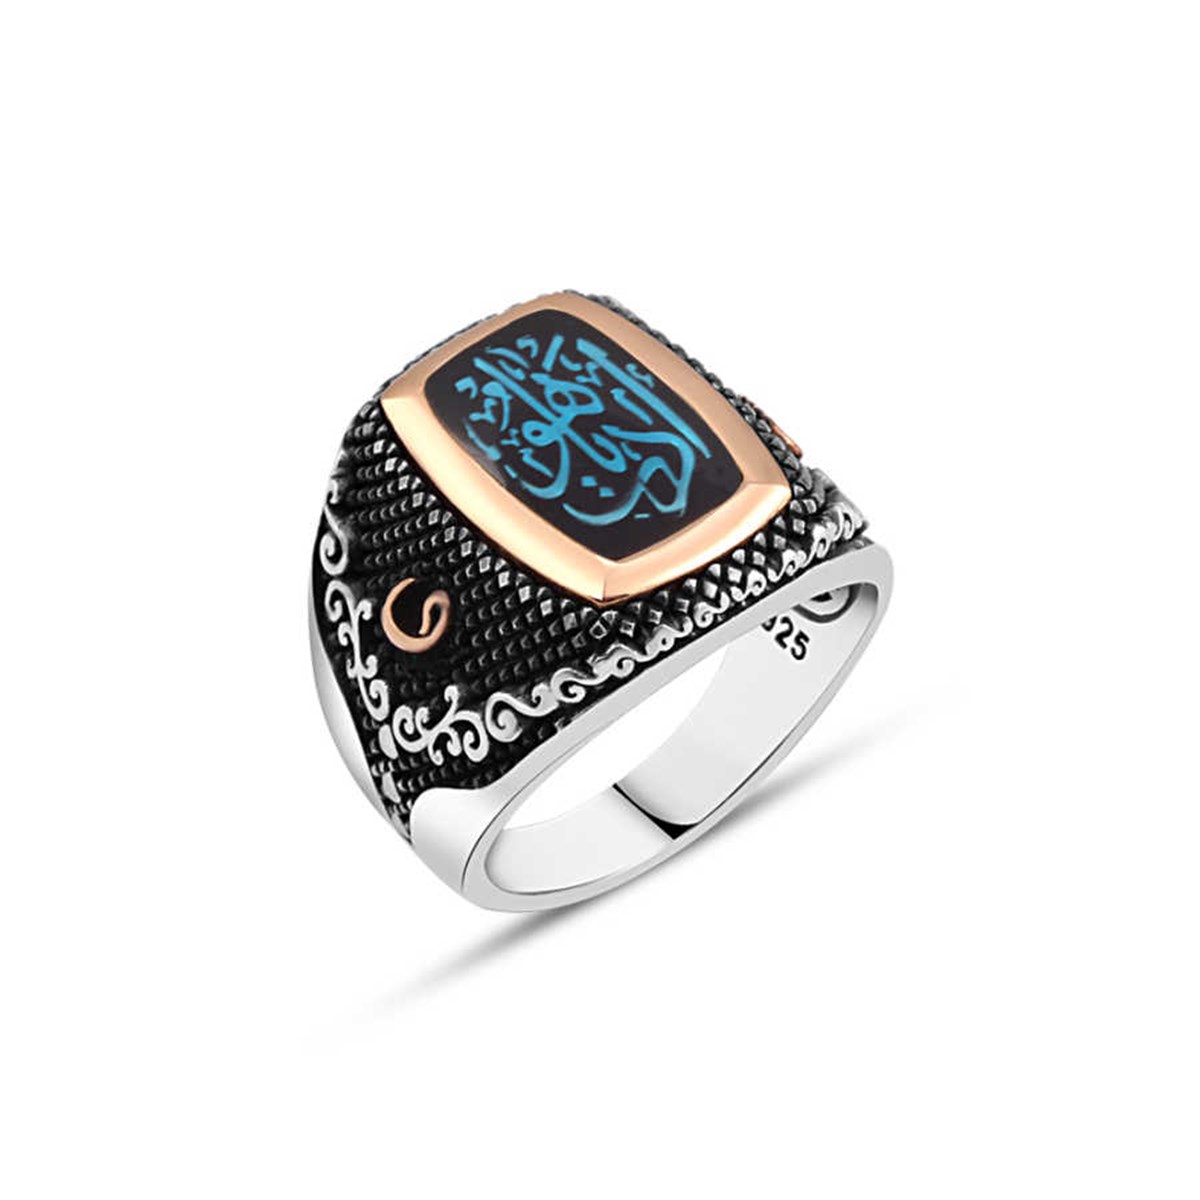 Enameled Adept Yahu Inscription Sterling Silver Men's Ring